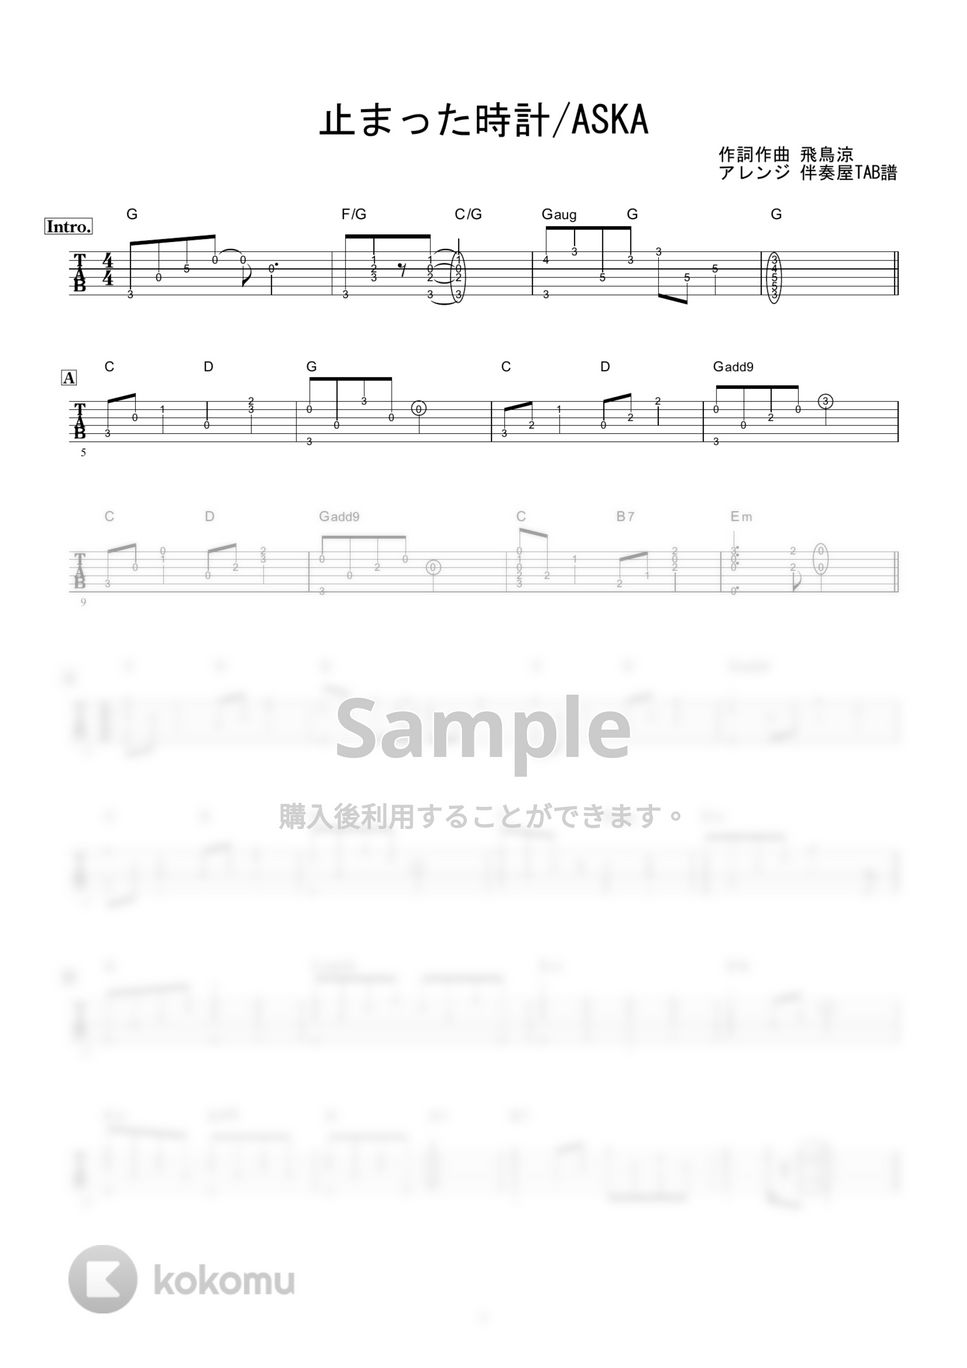 ASKA - 止まった時計 new version (ギター伴奏/イントロ・間奏ソロギター) by 伴奏屋TAB譜